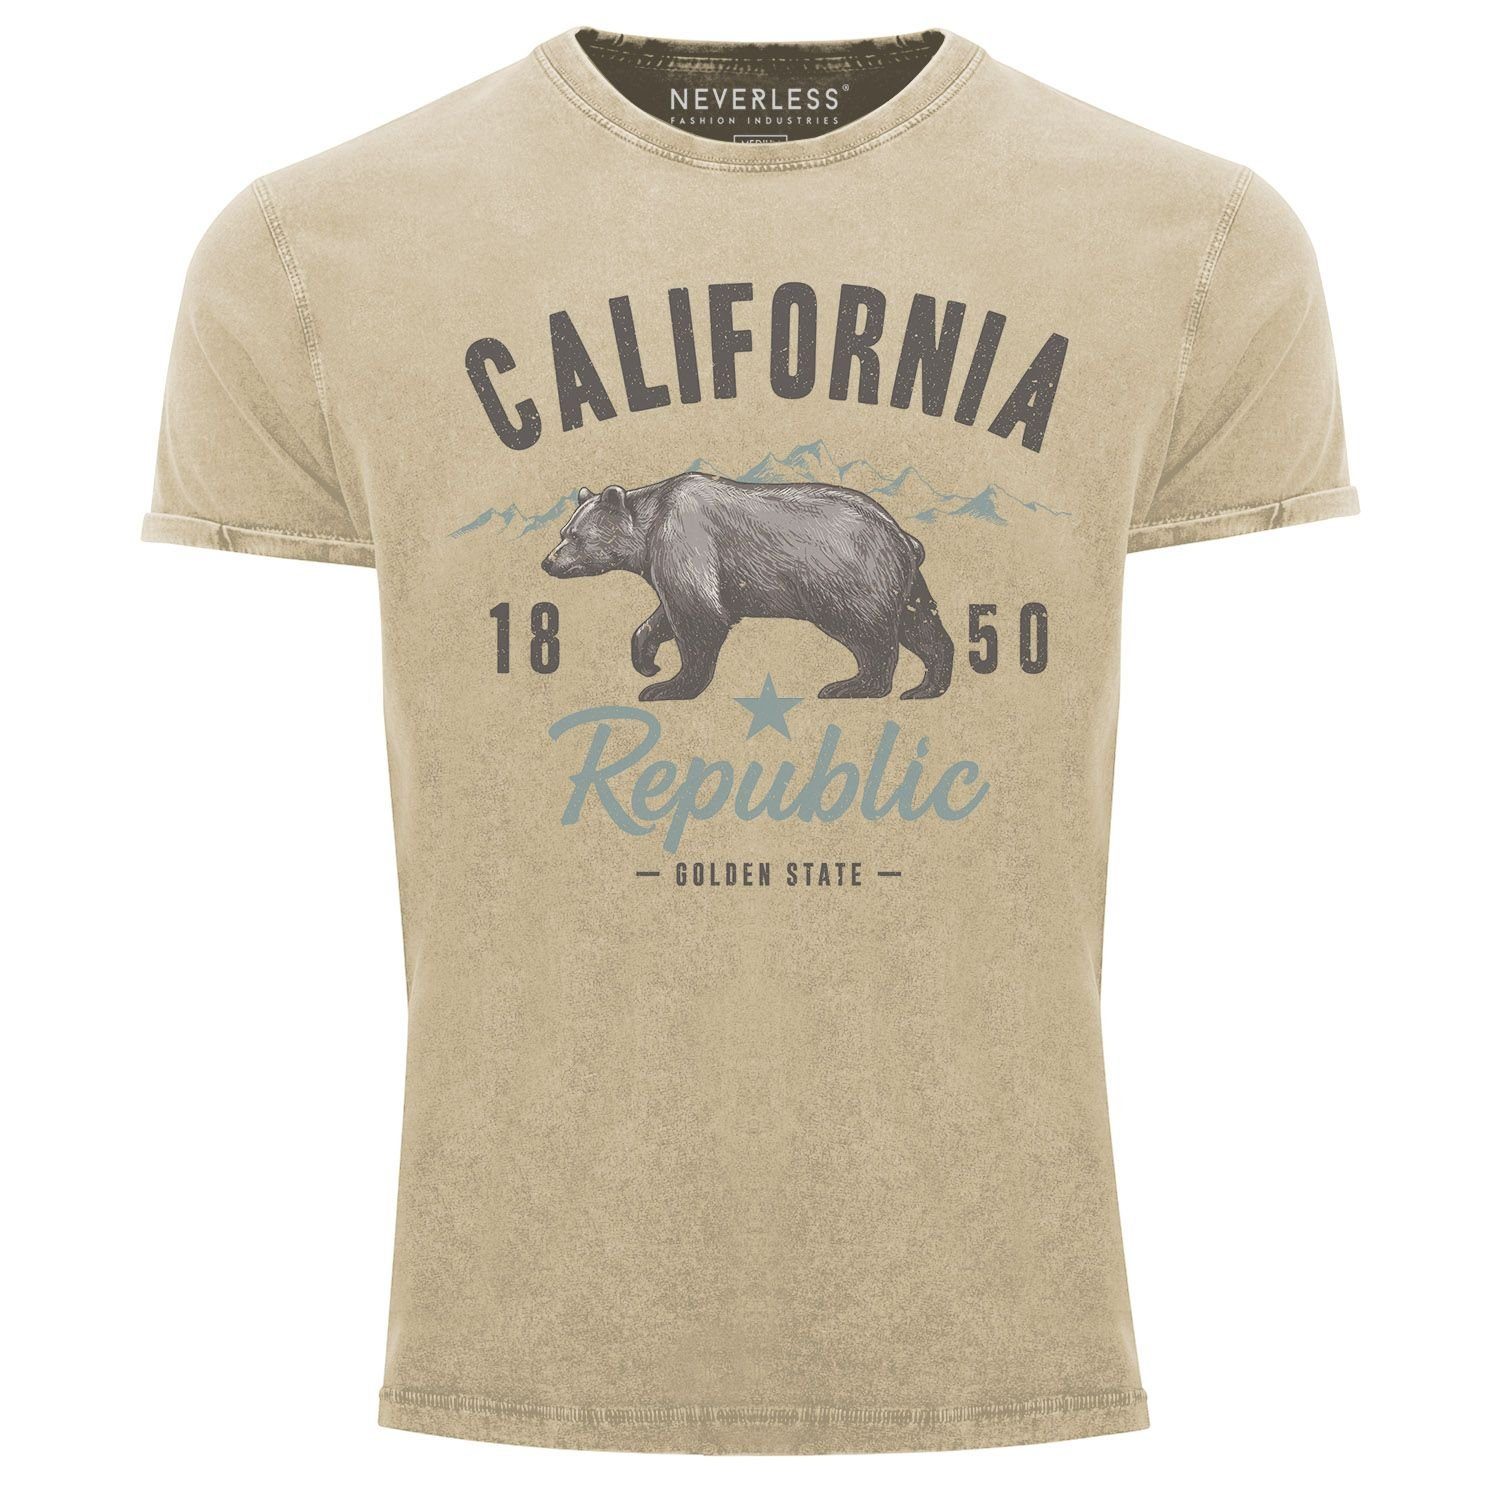 Neverless Print-Shirt Herren Shirt State Neverless® Used Print mit Golden Summer Printshirt Bear Look California Sommer Vintage USA Aufdruck Bär natur T-Shirt